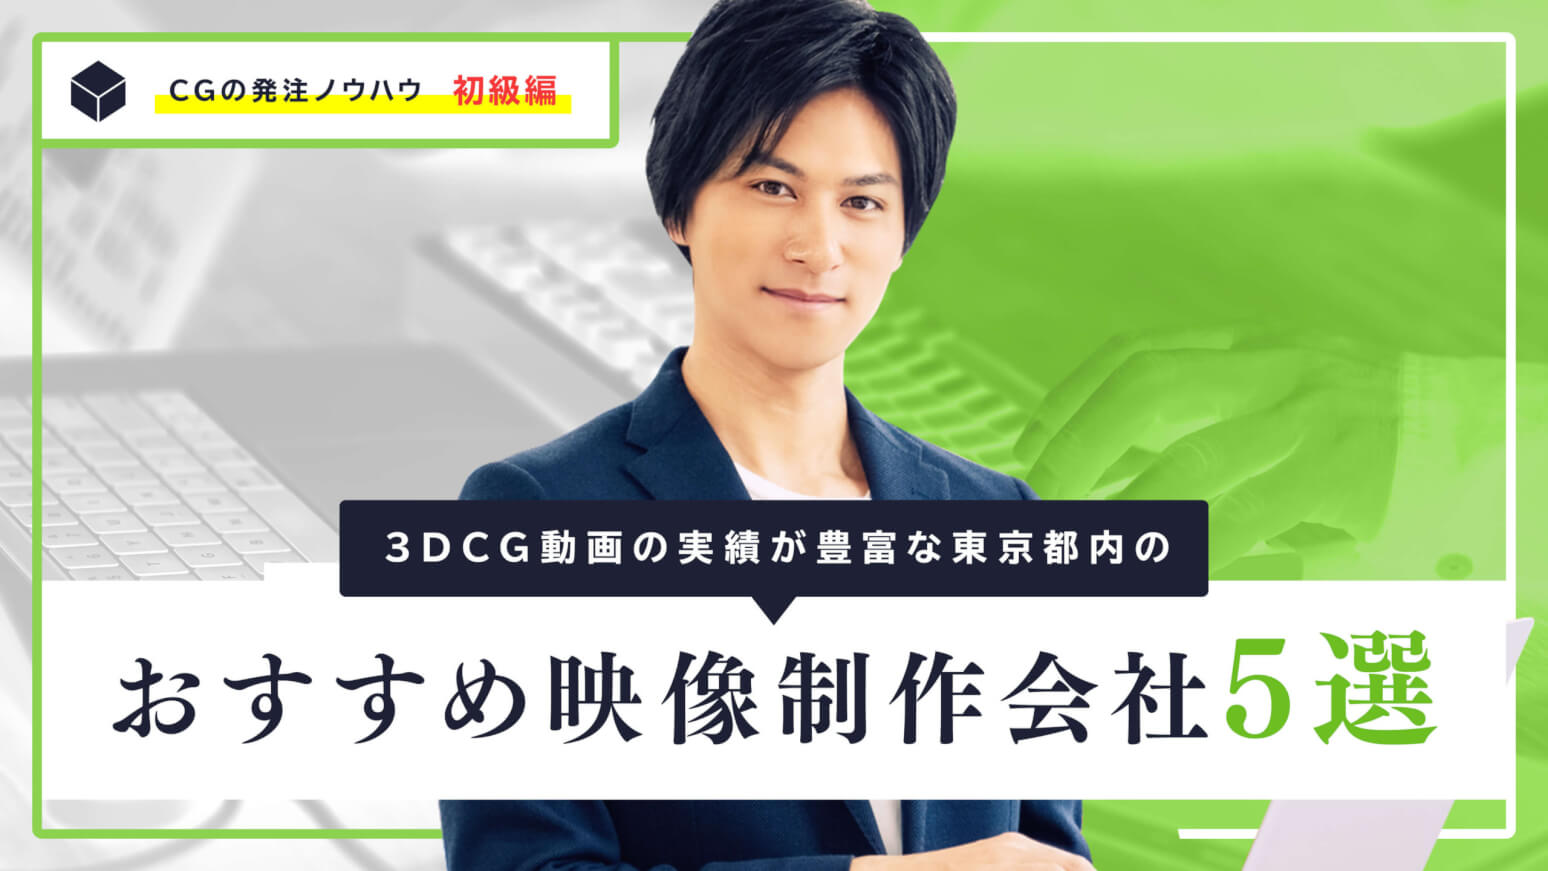 3DCG映像制作の実績が豊富な東京都内のおすすめ映像制作会社5選